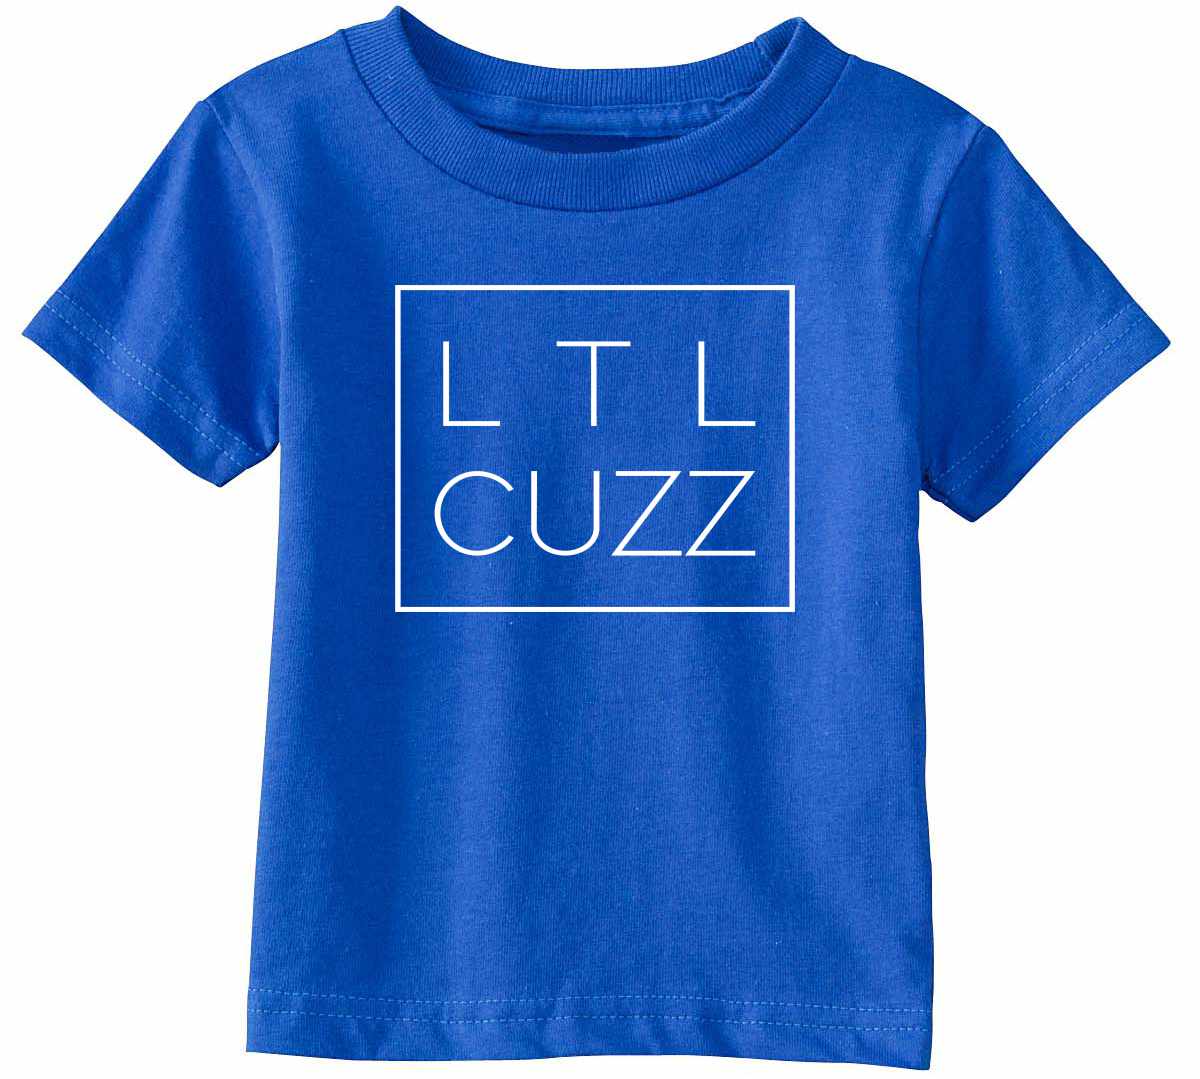 LTL Cuzz, Little Cousin - Box on Infant-Toddler T-Shirt